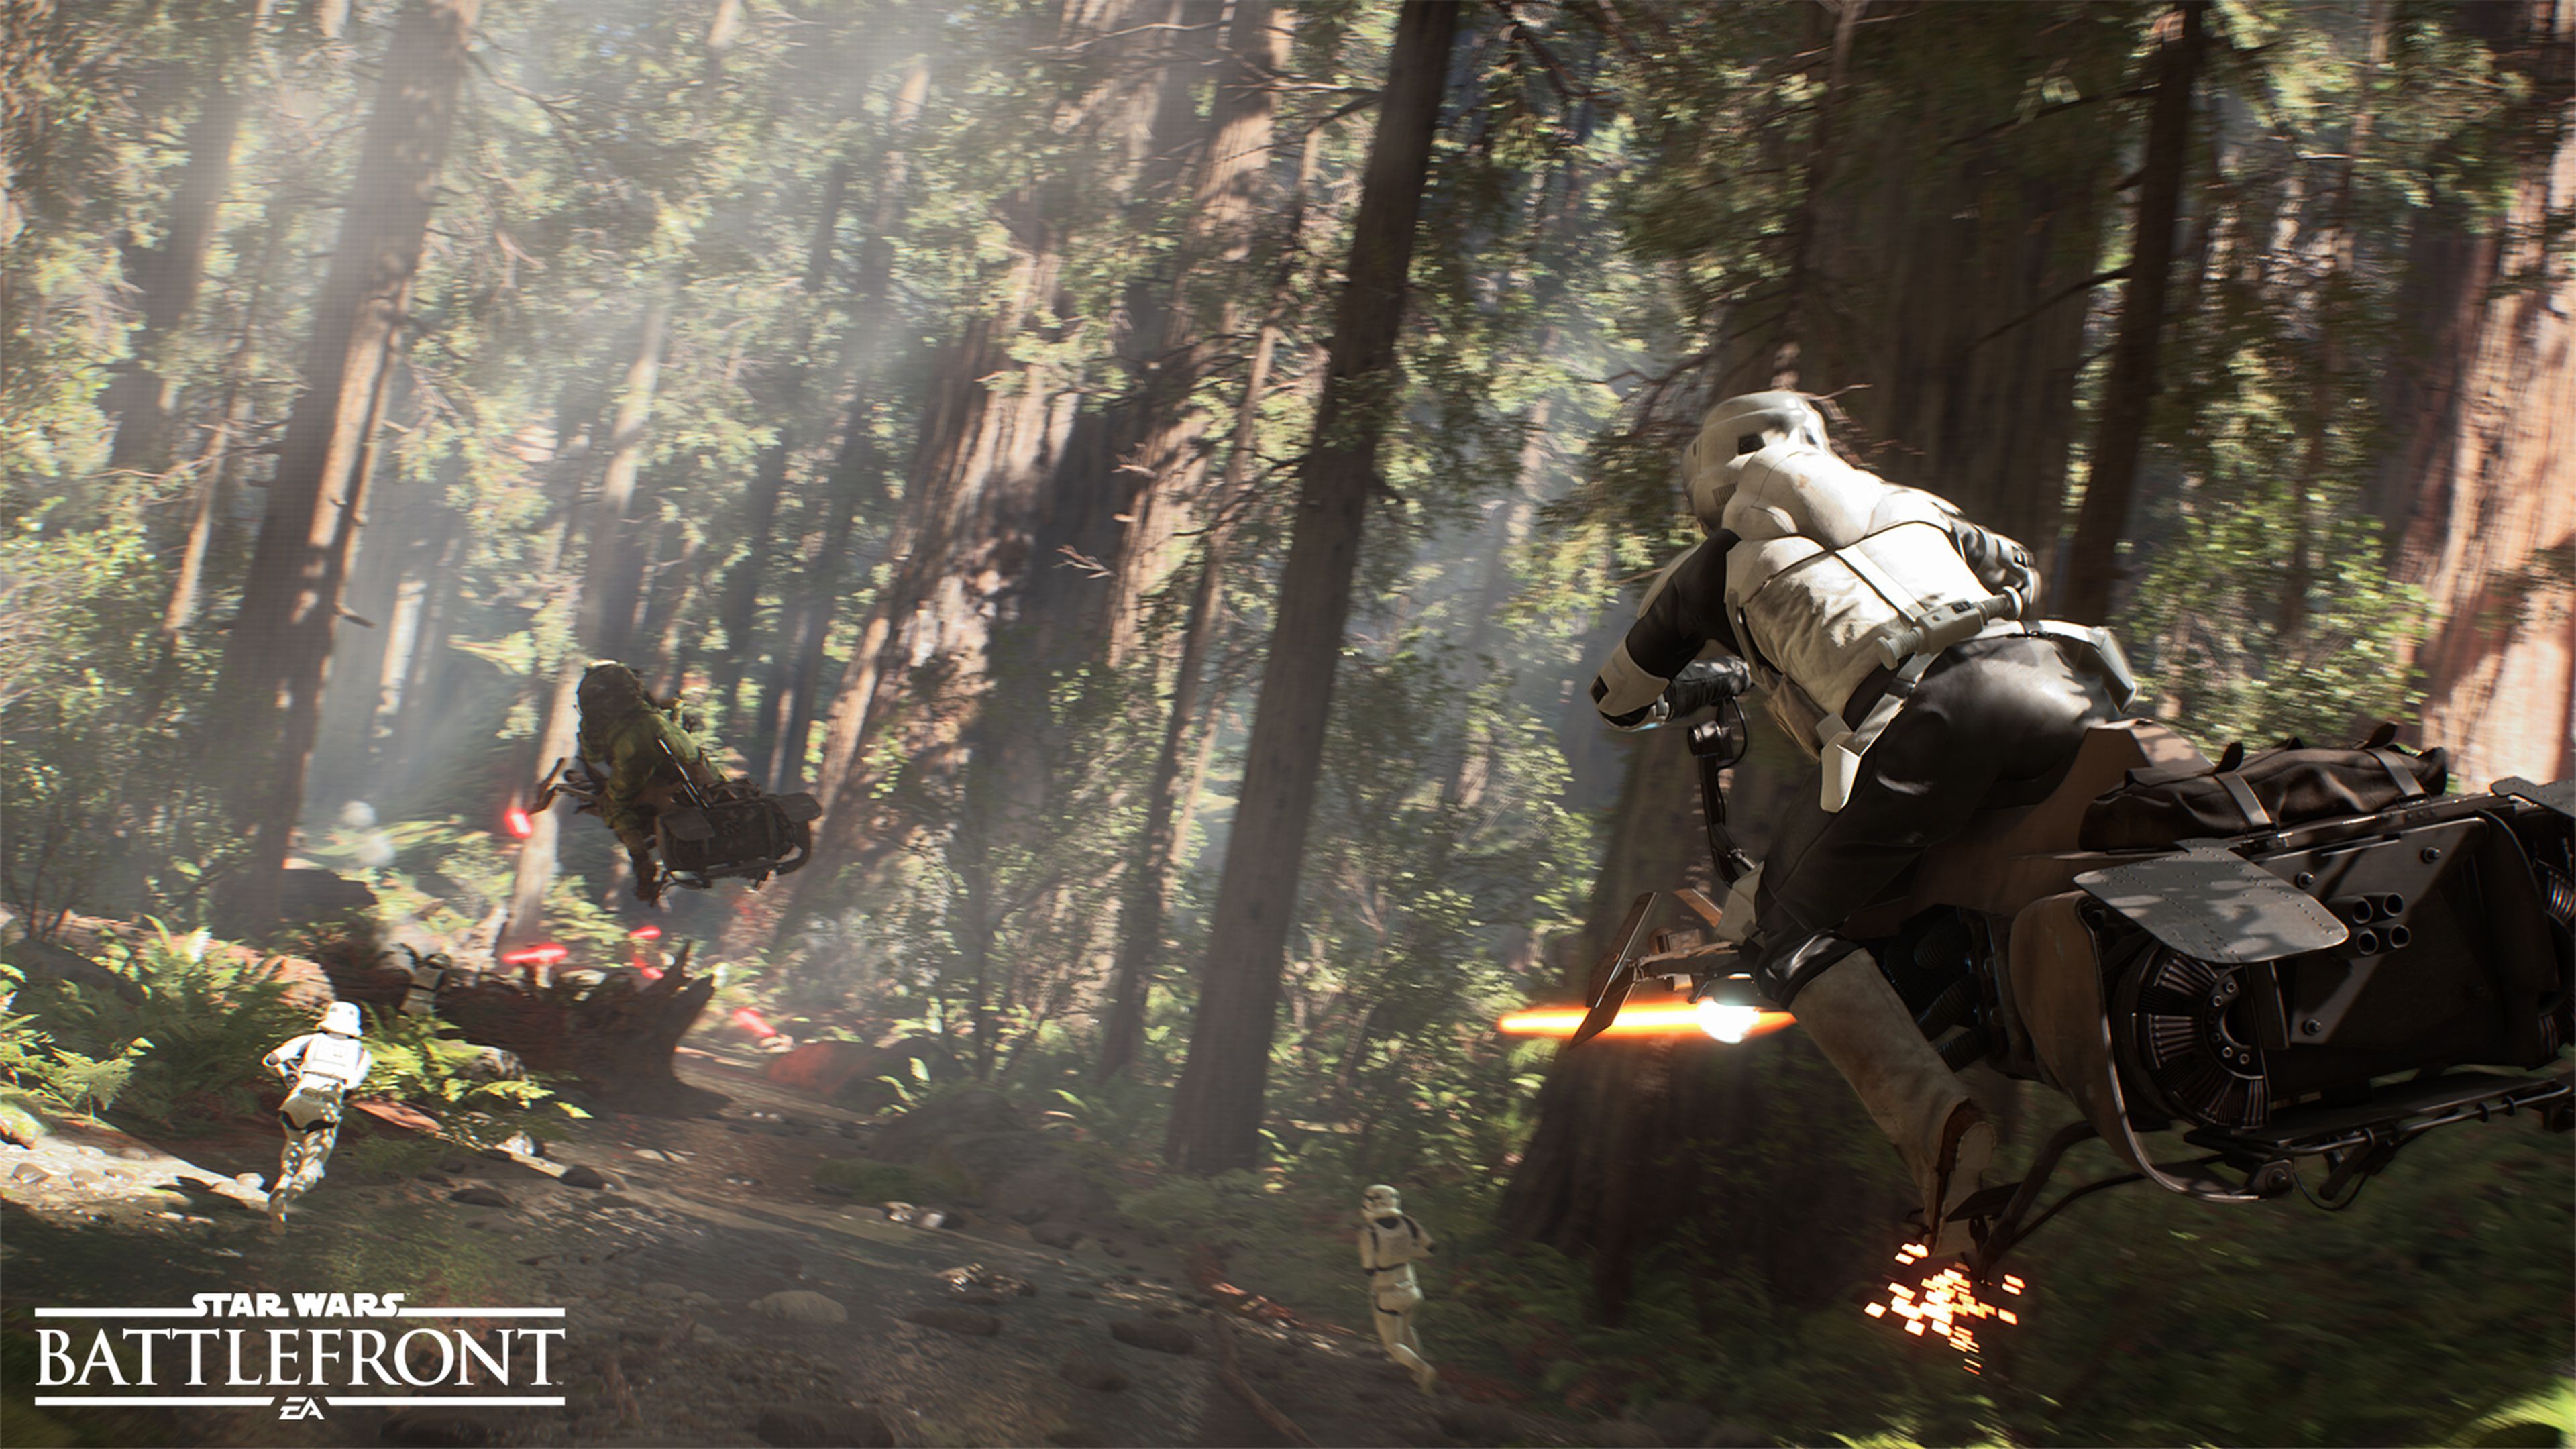 Star Wars Battlefront, acceso anticipado con EA Access en Xbox One